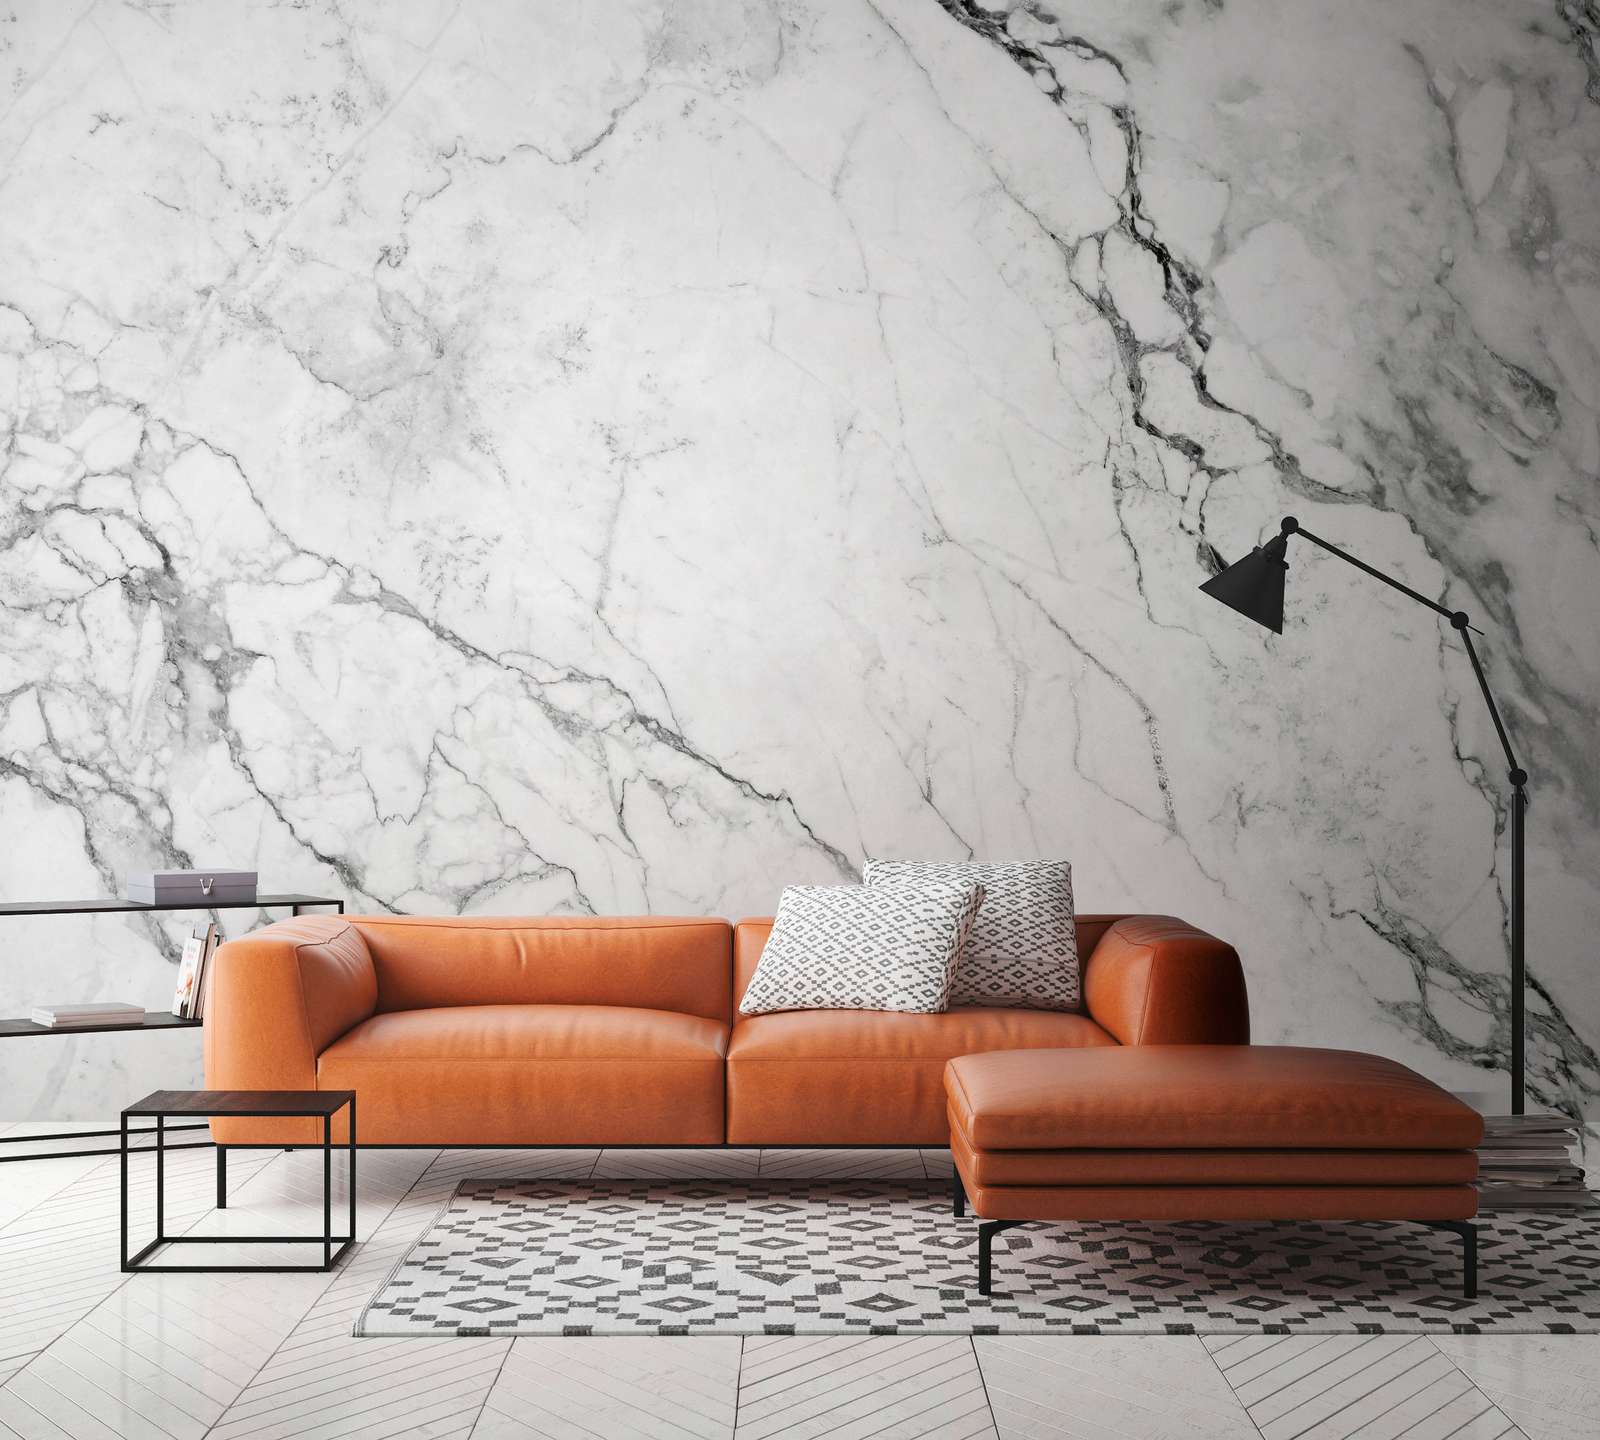             Digital behang met moderne marmerlook - grijs, wit
        